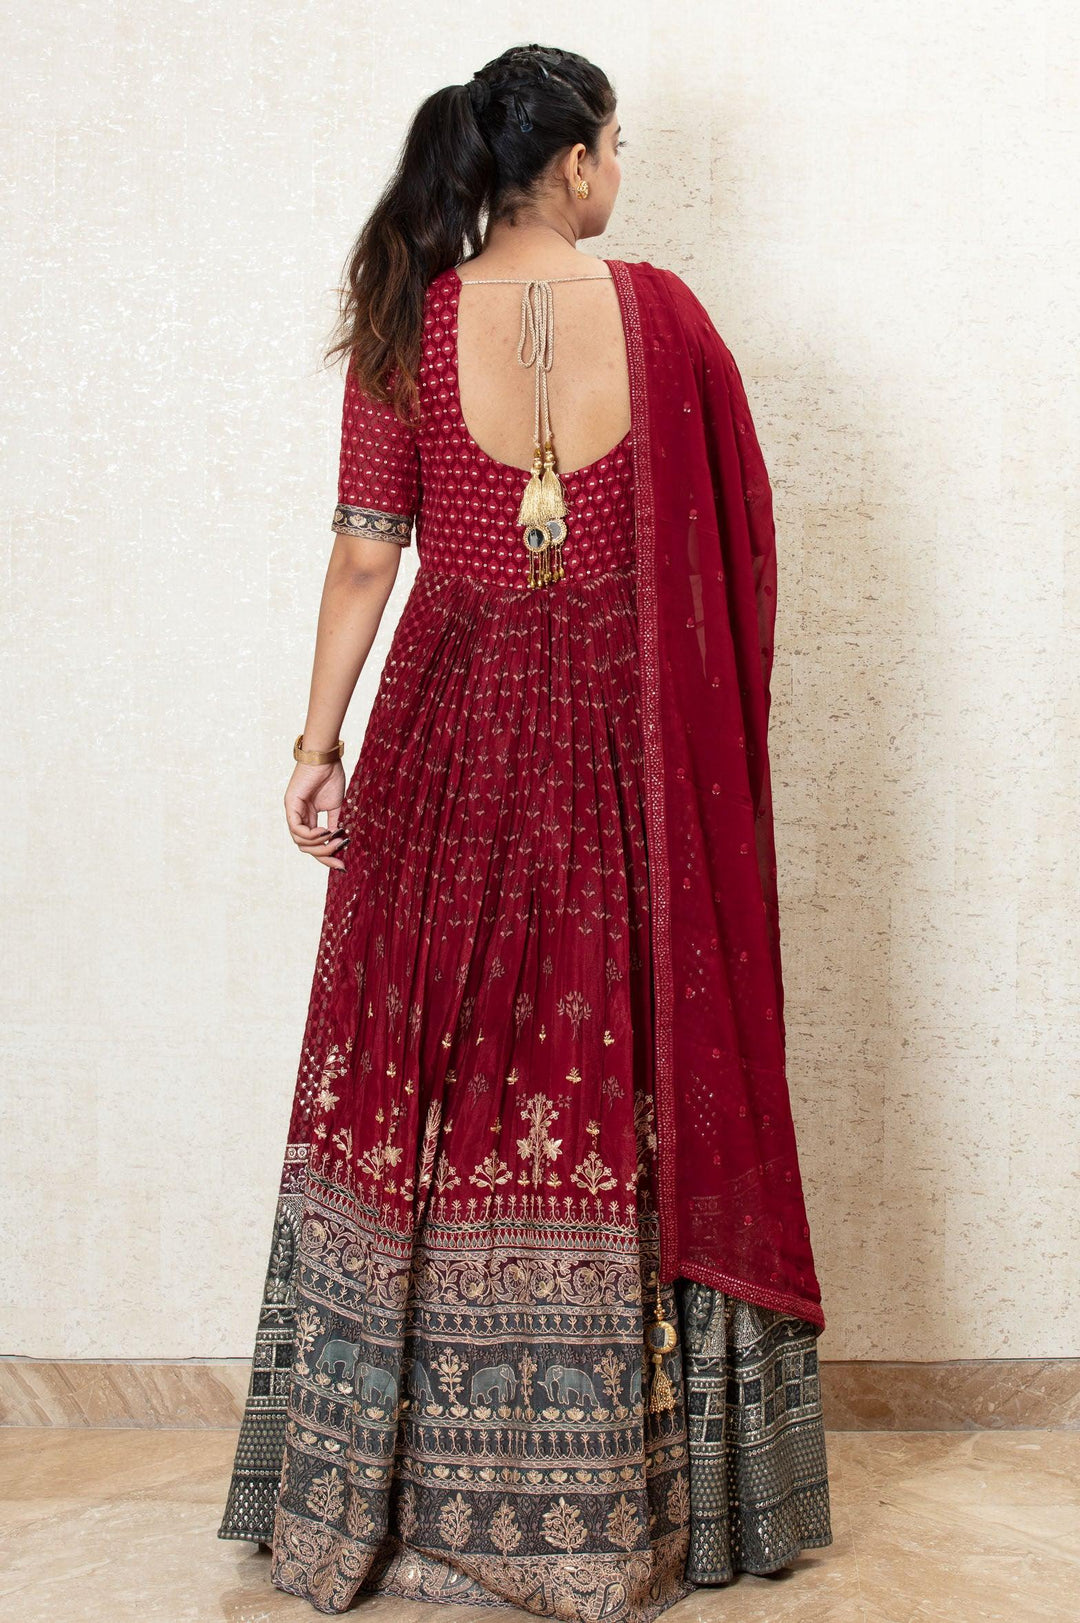 Maroon Beads, Zari, Sequins and Thread work with Printed Floor Length Anarkali Suit - Seasons Chennai